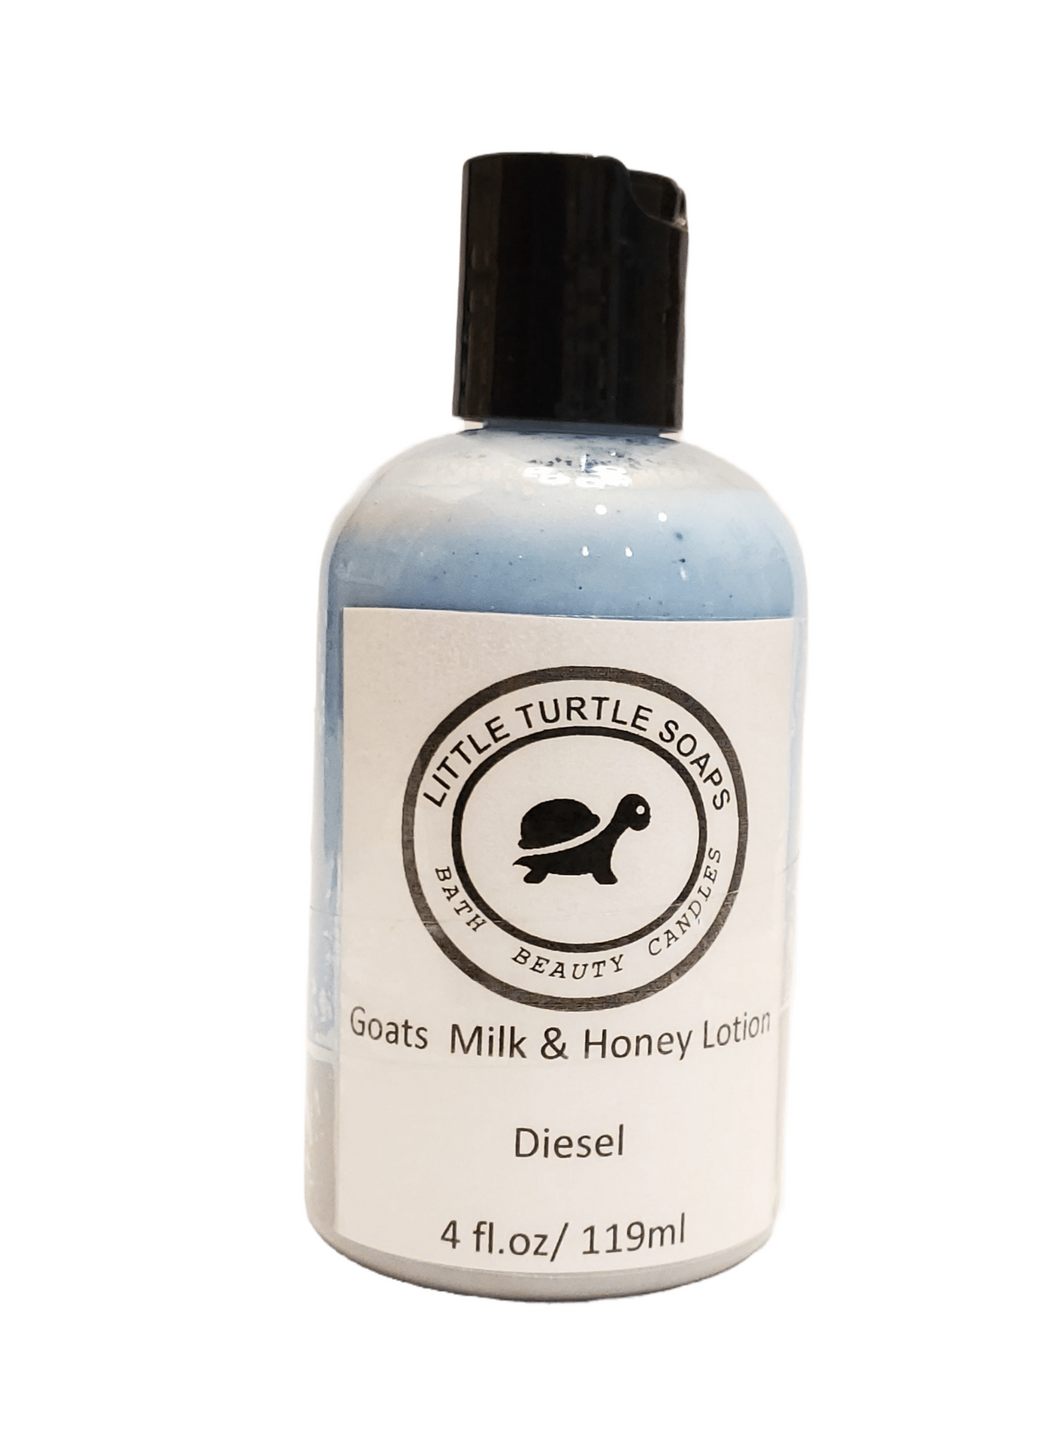 Diesel Goats Milk & Honey Lotion